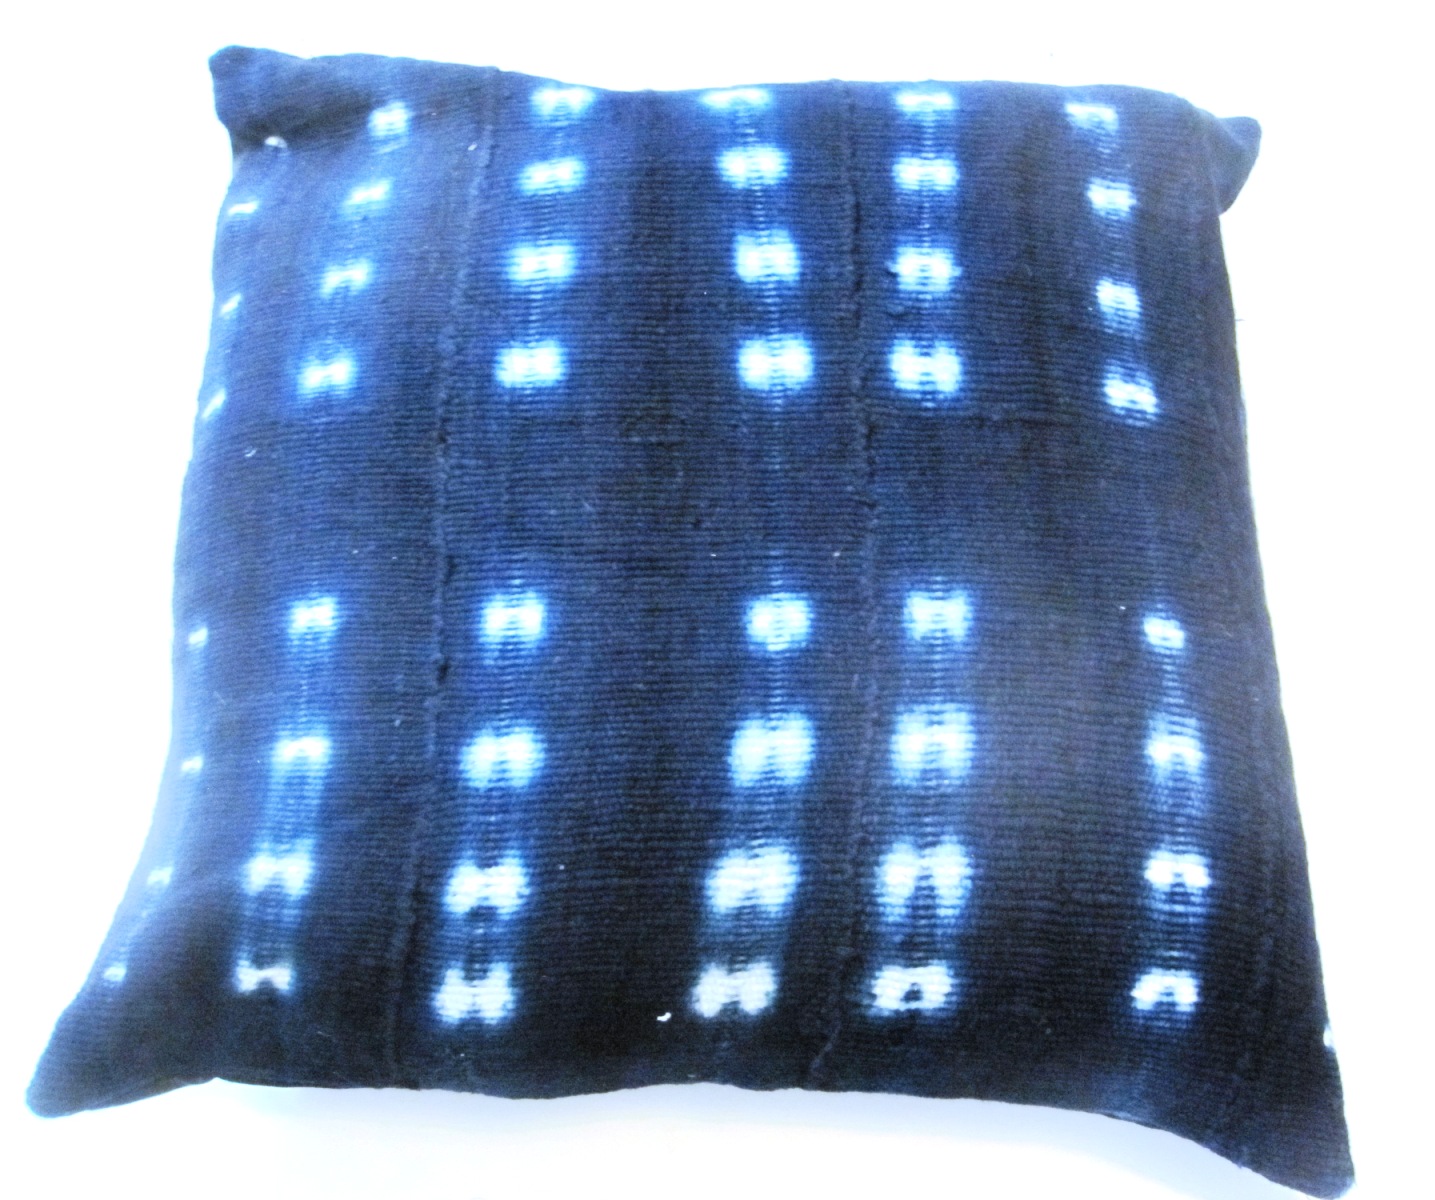 Pillow made from Vintage Mali Indigo Fabric